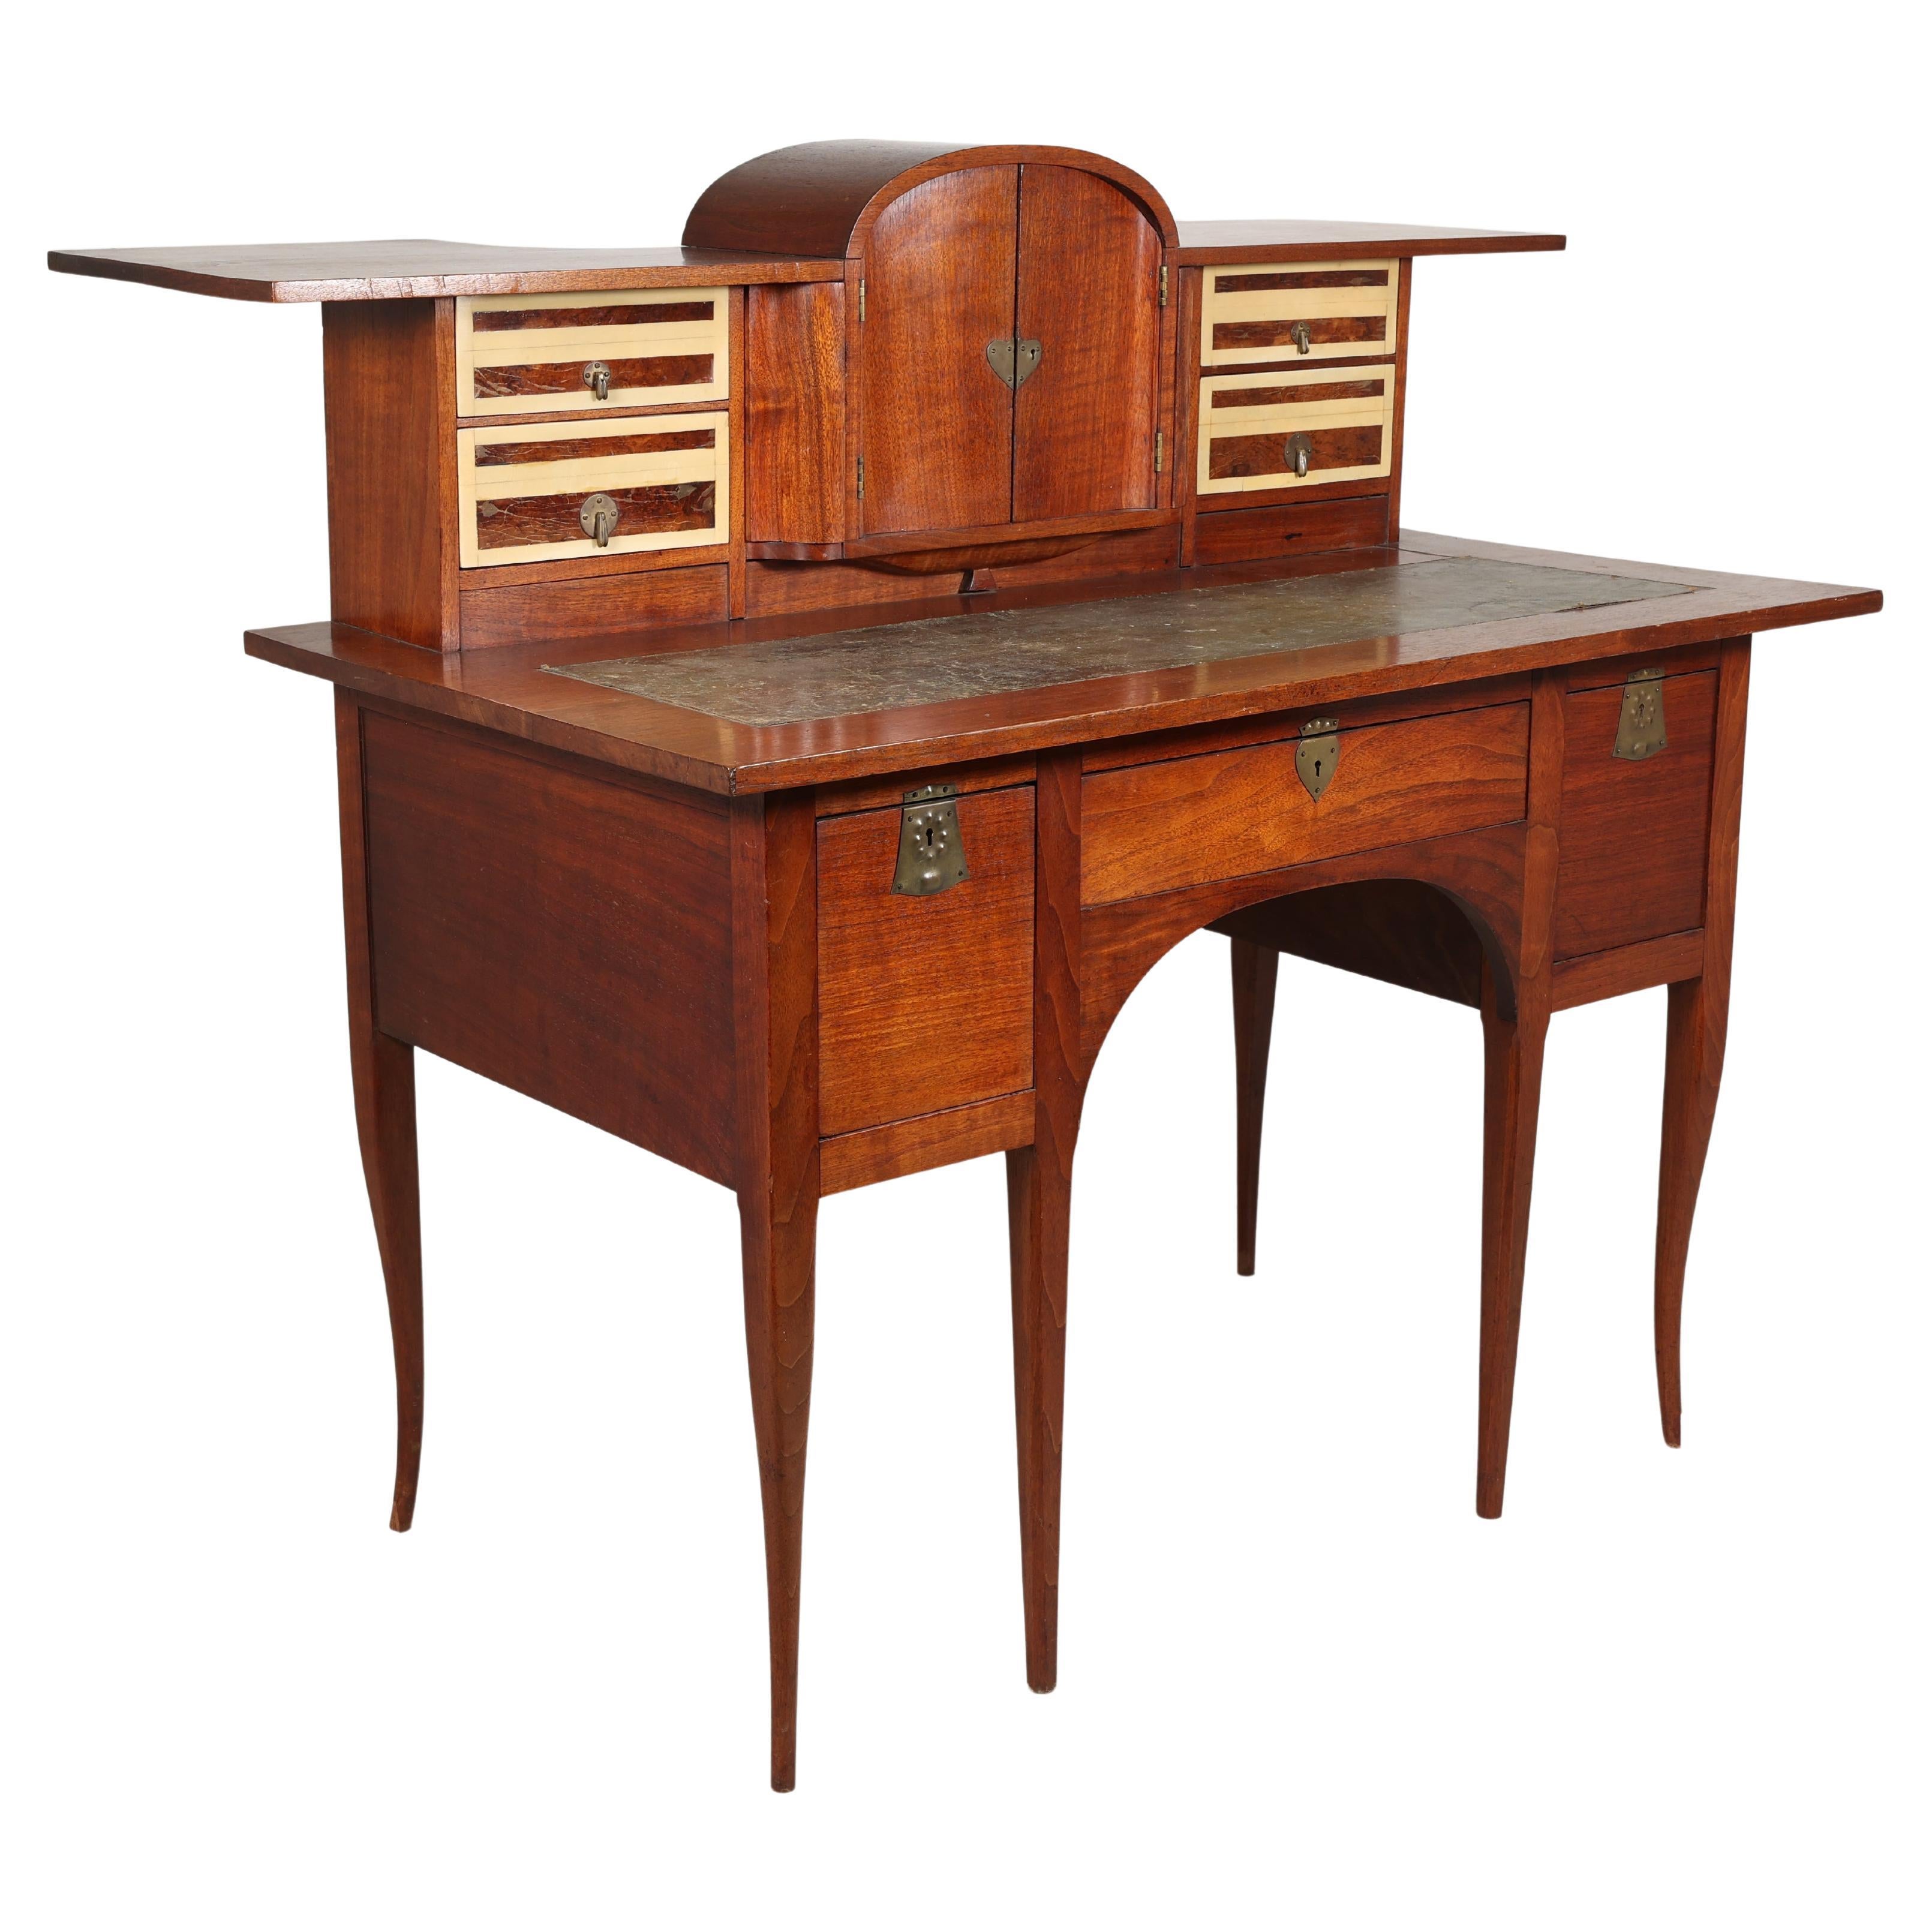 George Walton. Arts & Crafts Walnut Desk with Secret Drawers & Heart Escutcheons